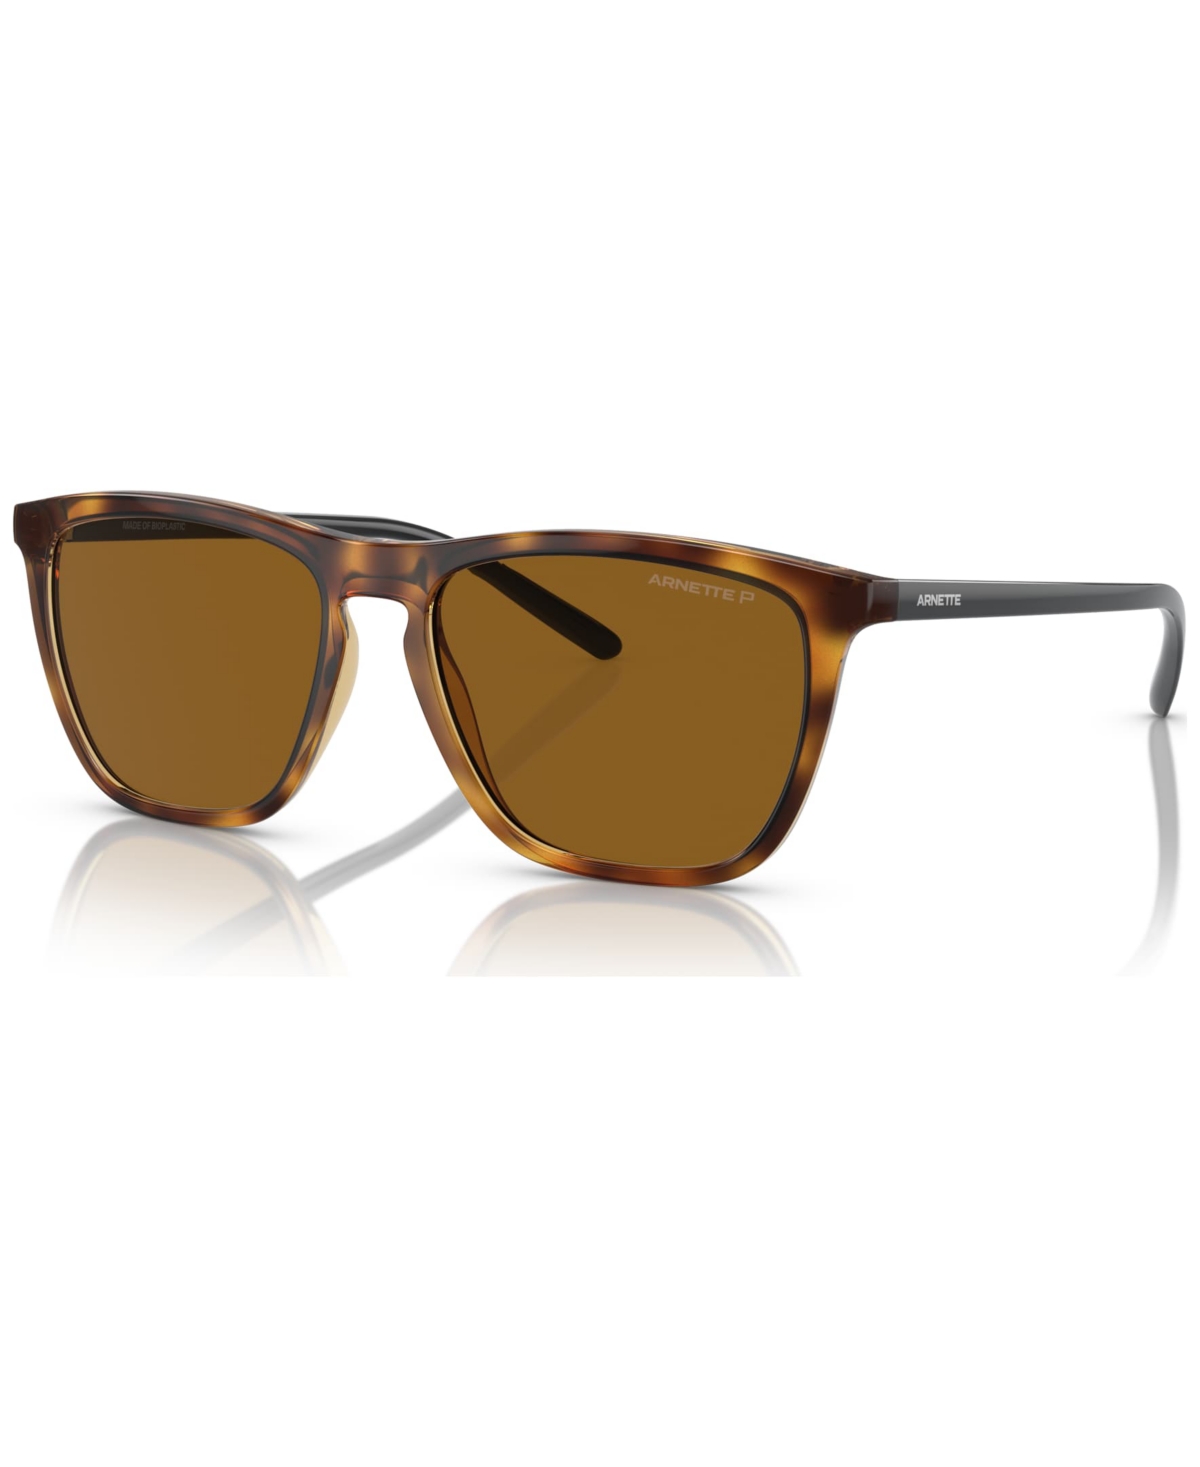 Men's Polarized Sunglasses, Fry - Dark Havana